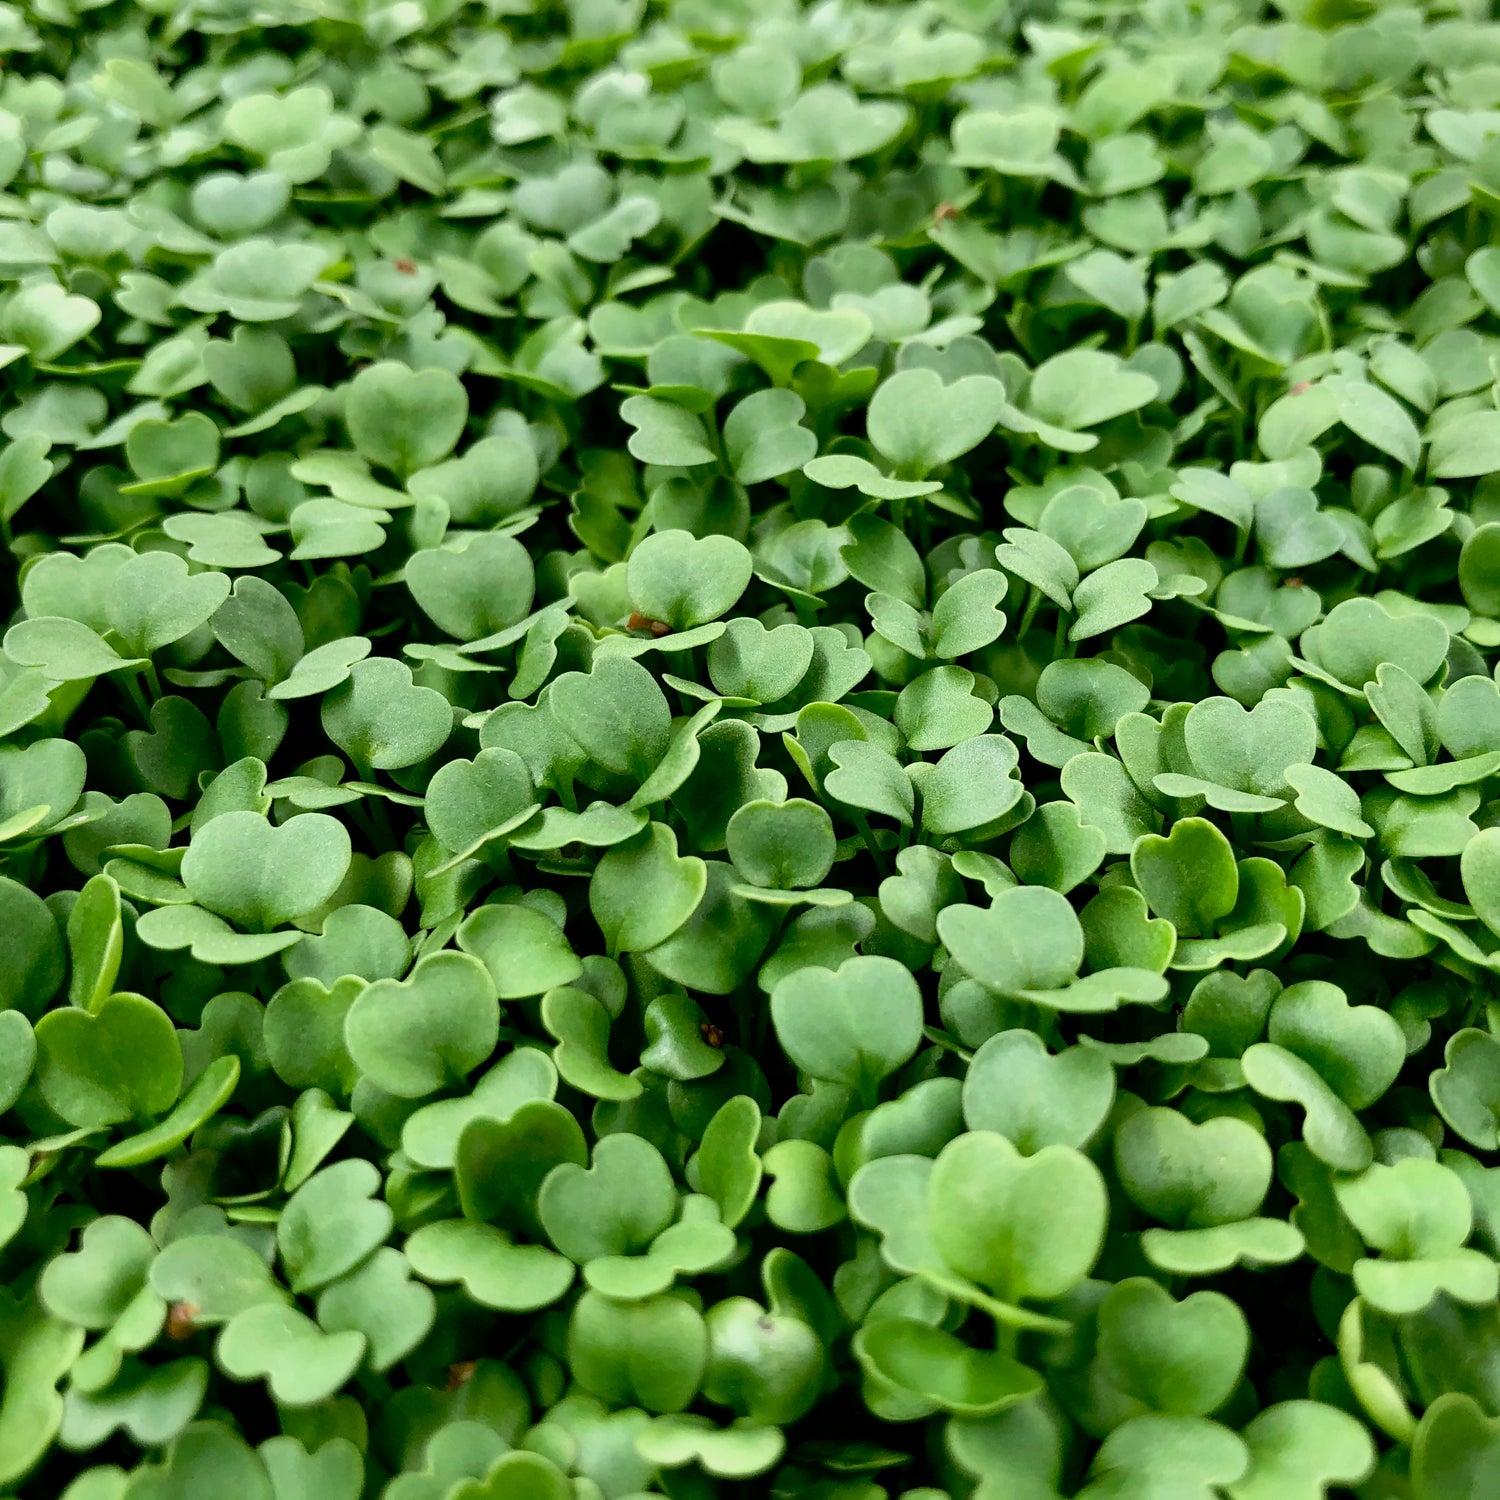 Arugula microgreens have tiny green heart shaped leaves.